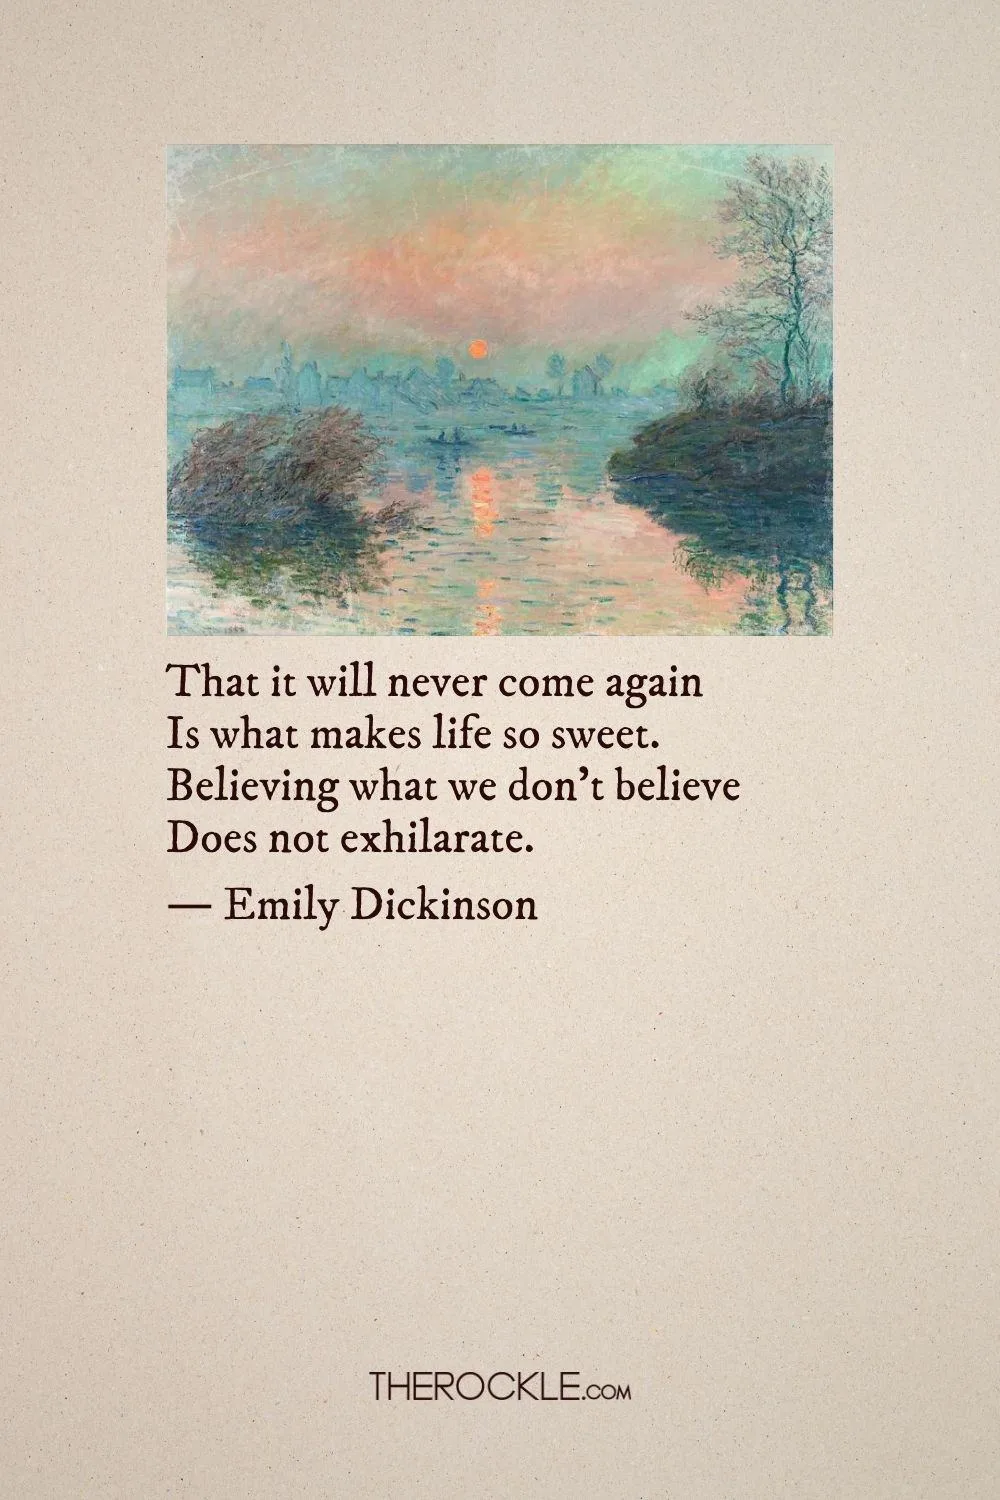 Emjily Dickinson on life's fleeting moments